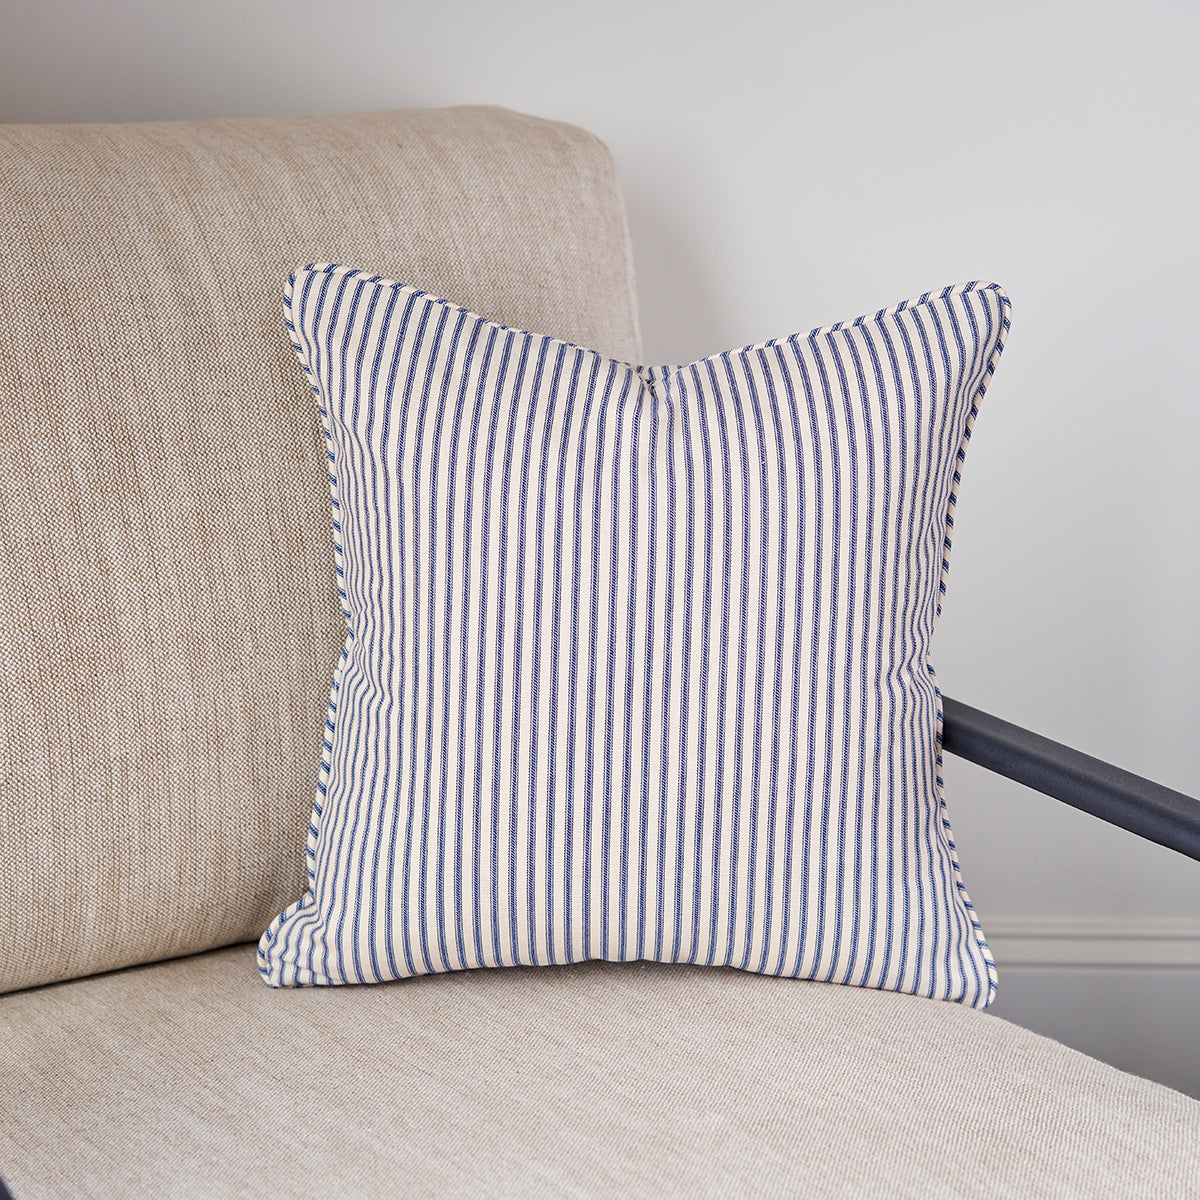 Ticking Stripe Throw Pillow Cover 18x18 – Southern Ticking Co.